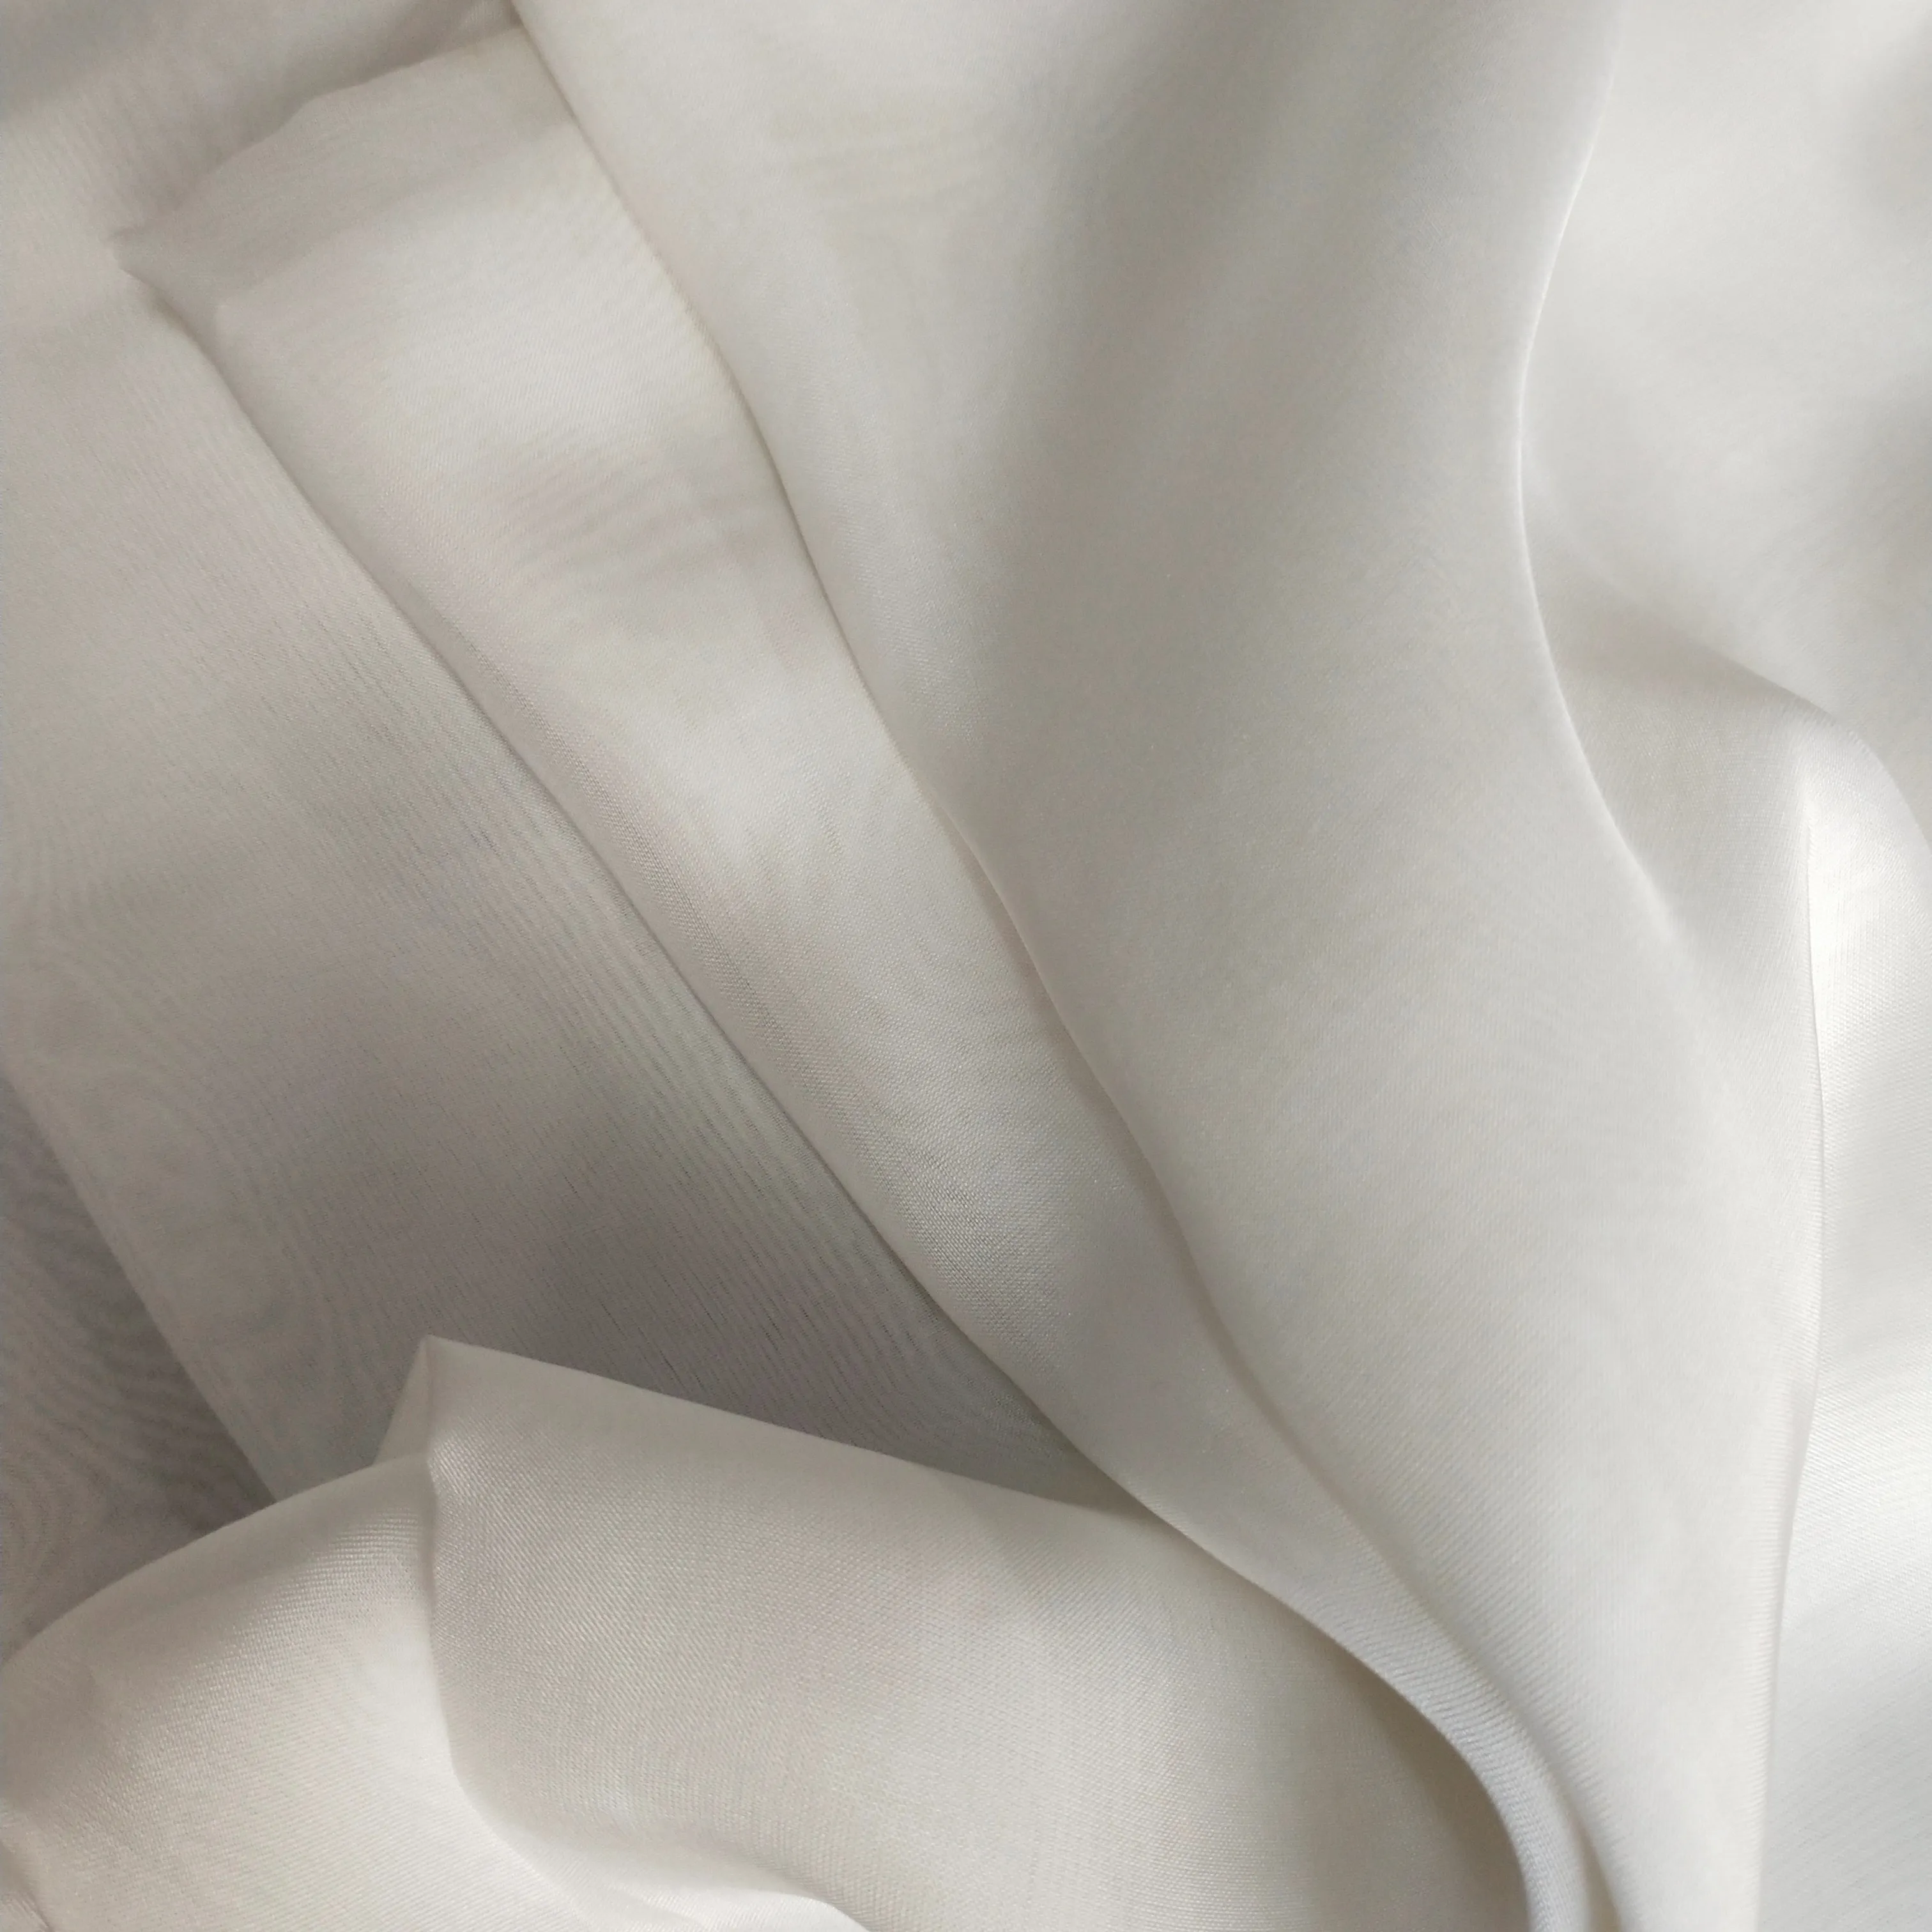 Tecido de chiffon de viscose de seda, cor branca 25% seda 75% viscose